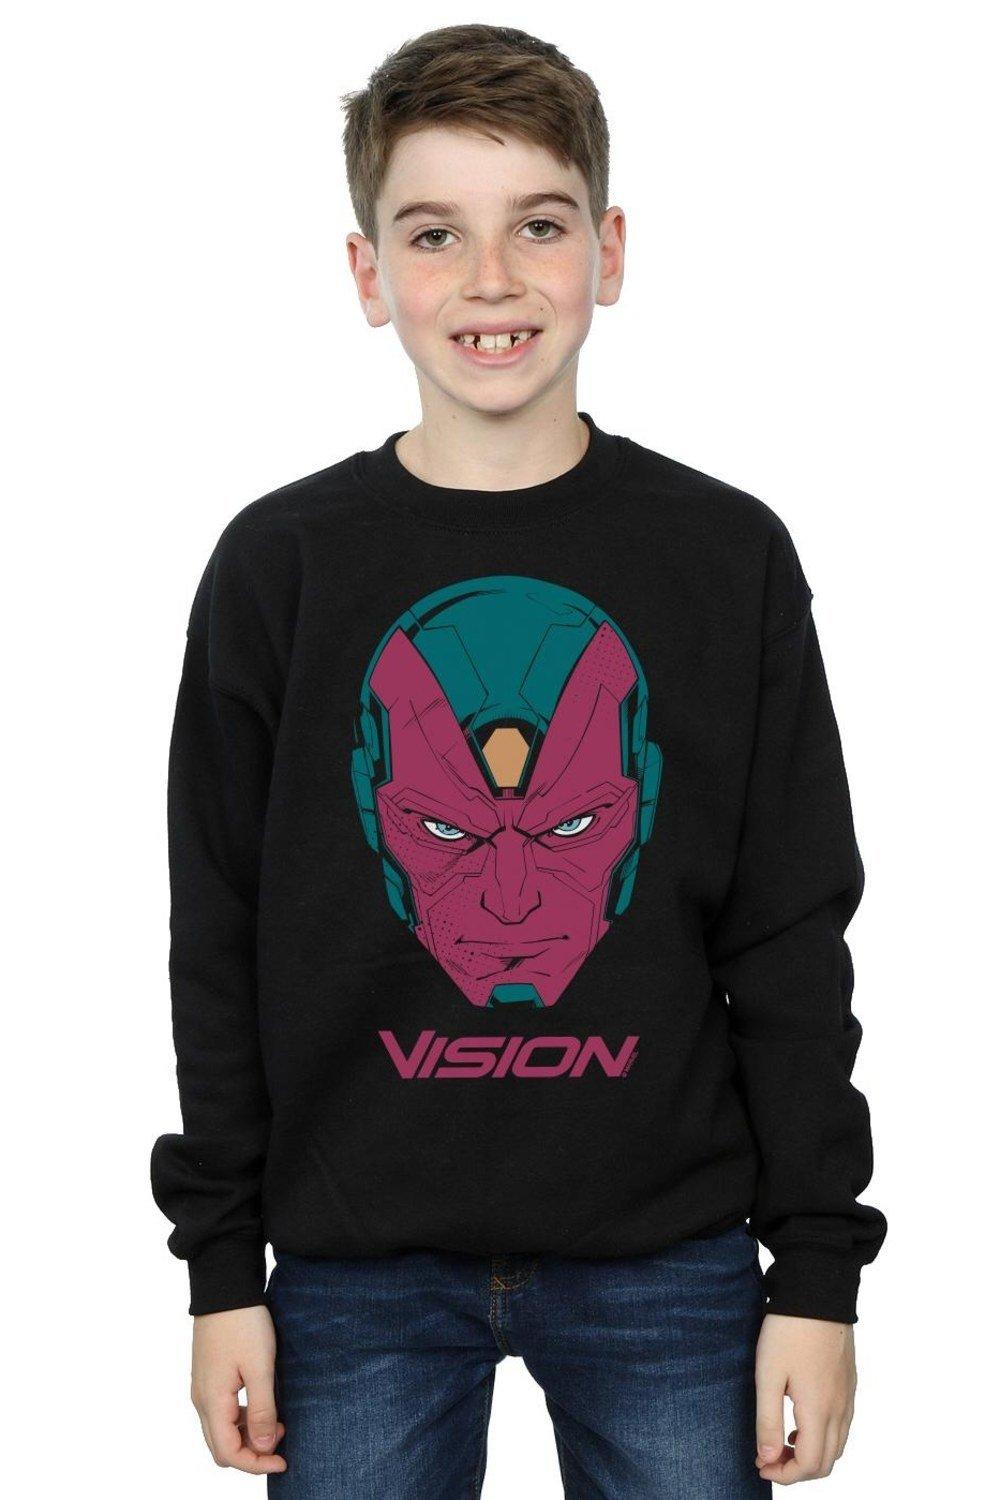 Avengers Vision Head Sweatshirt